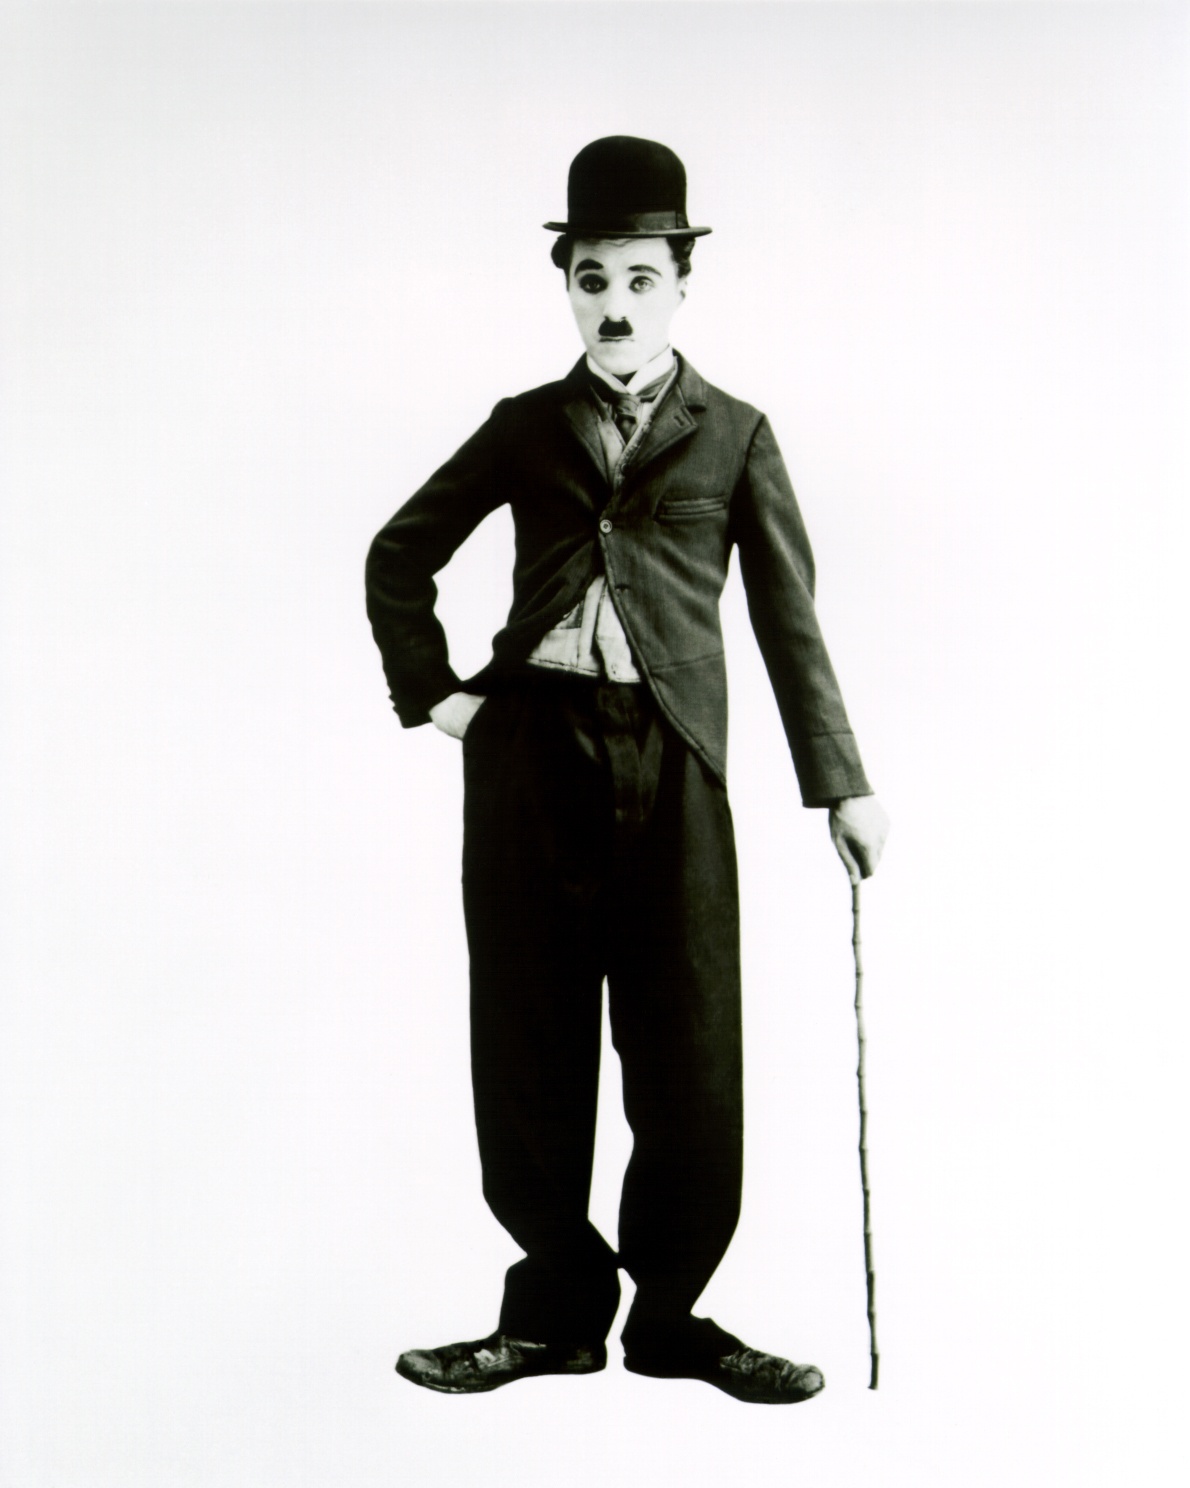 [Charles+Chaplin.jpg]